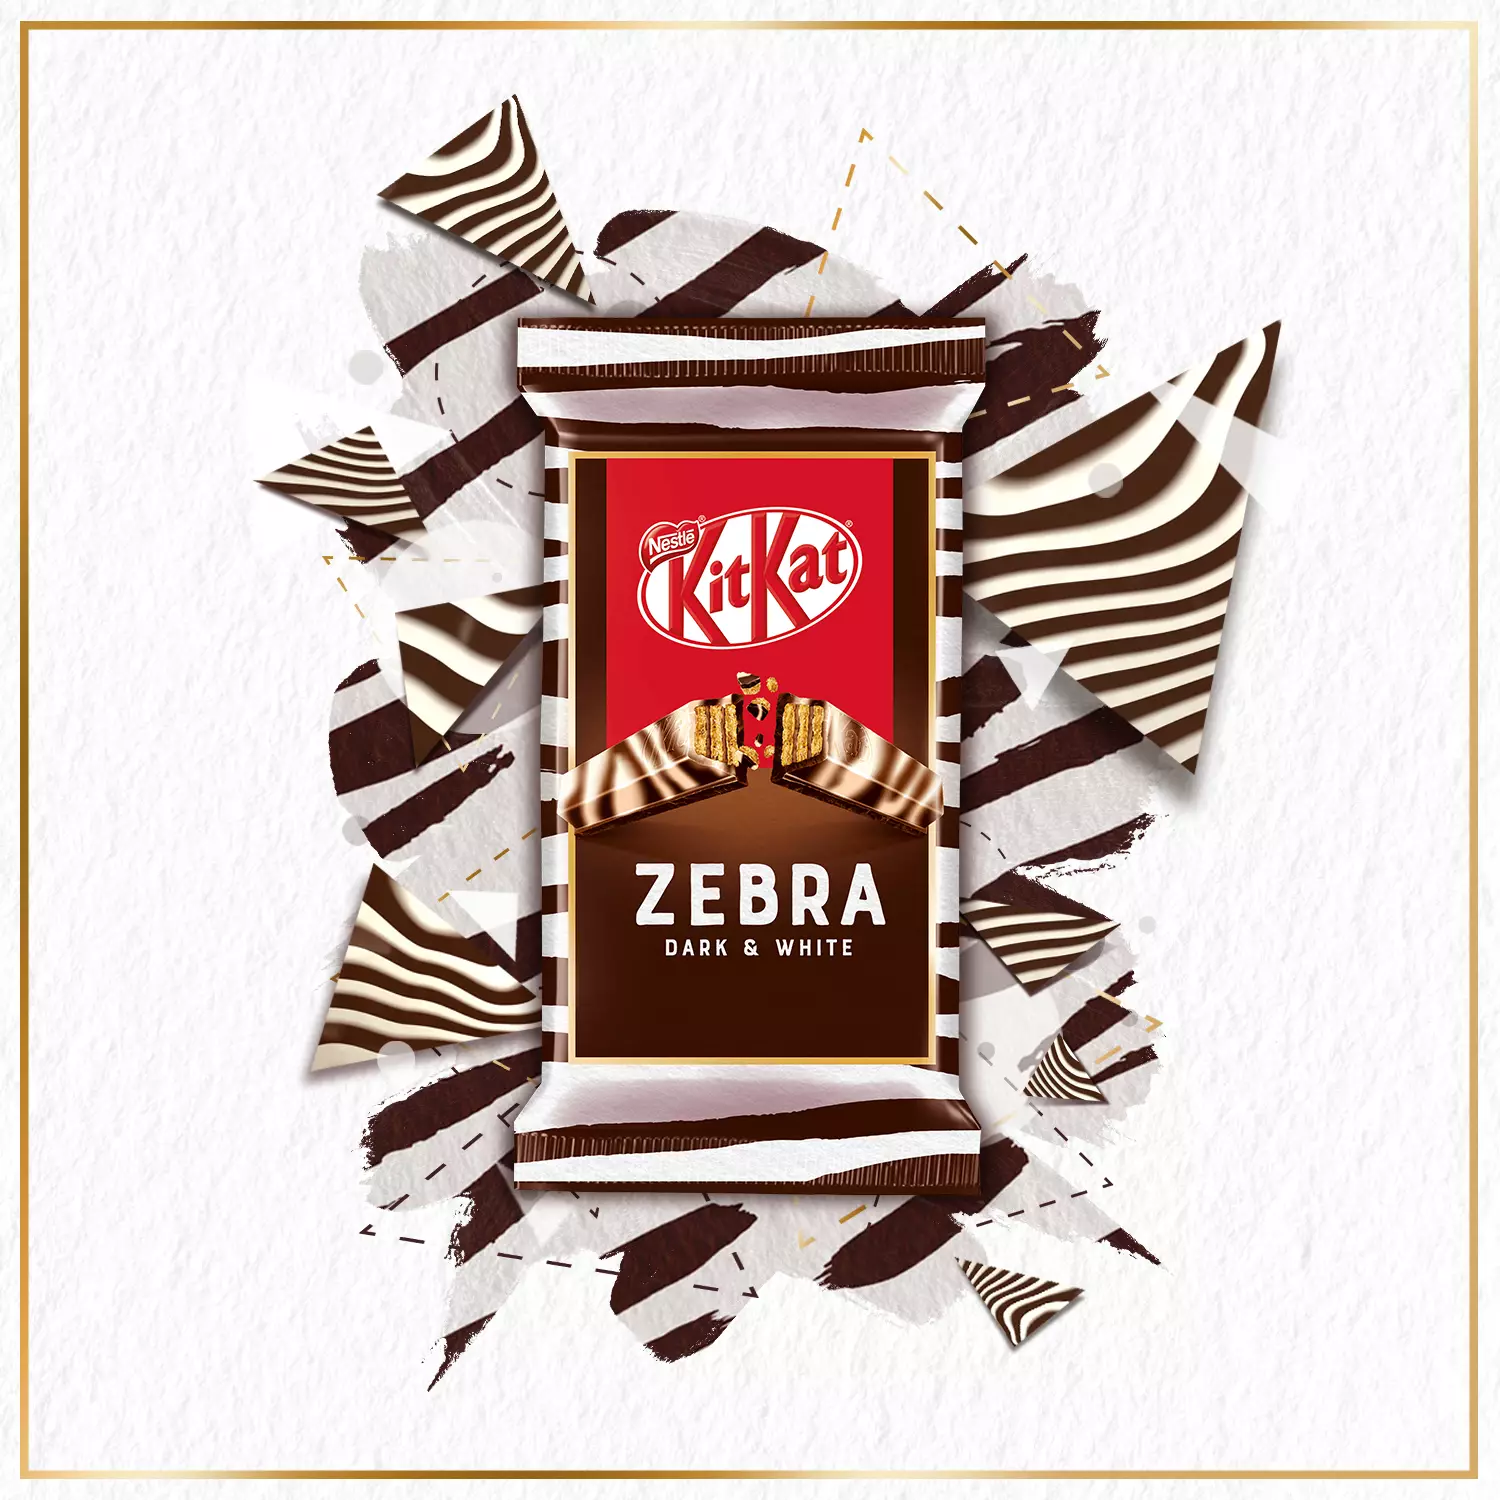 KitKat Zebra features dark and white chocolate (